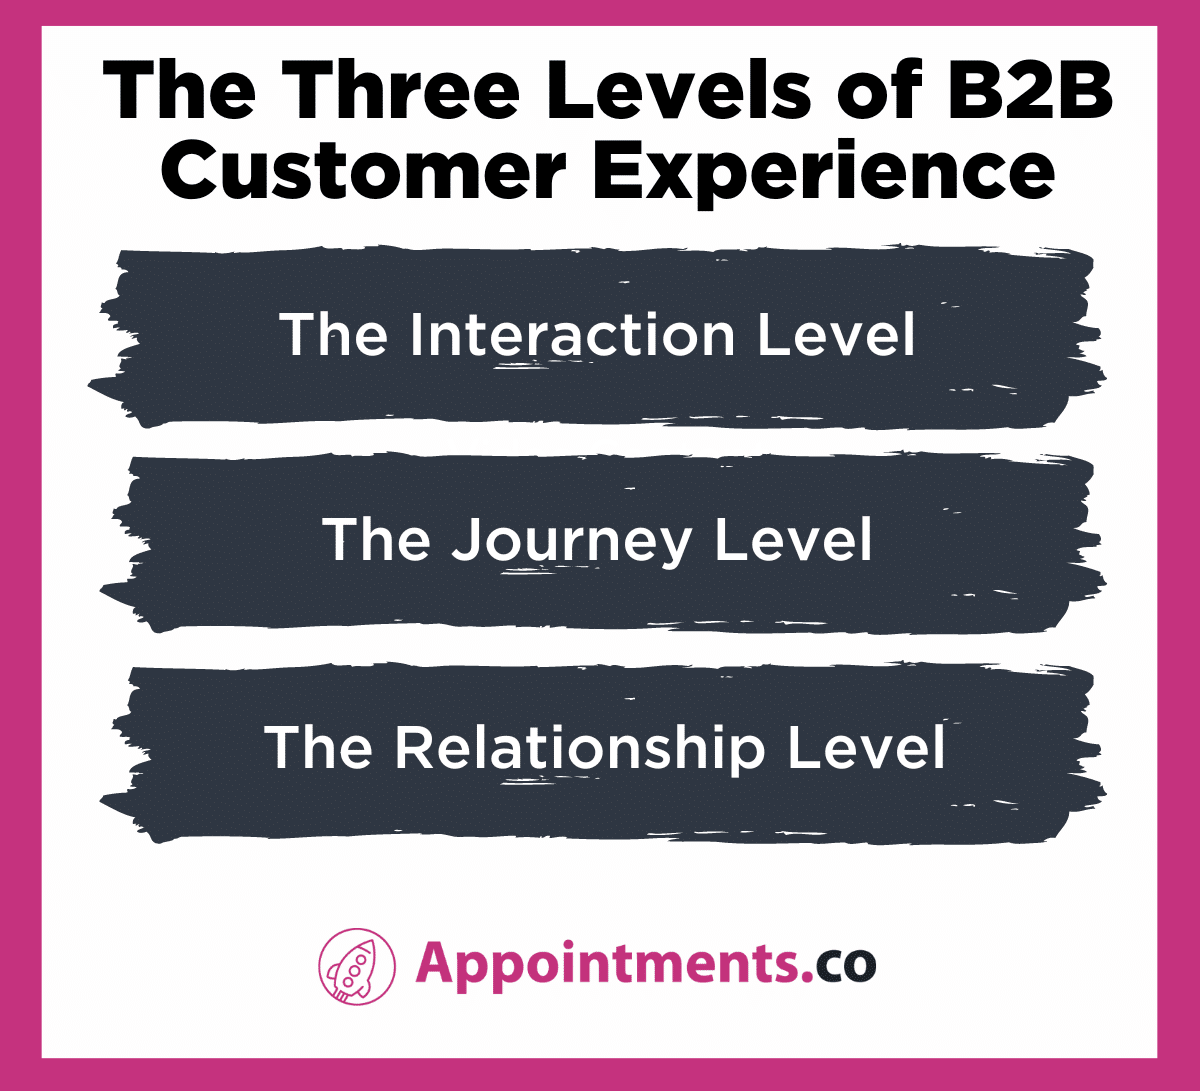 The Three Levels of B2B Customer Experience